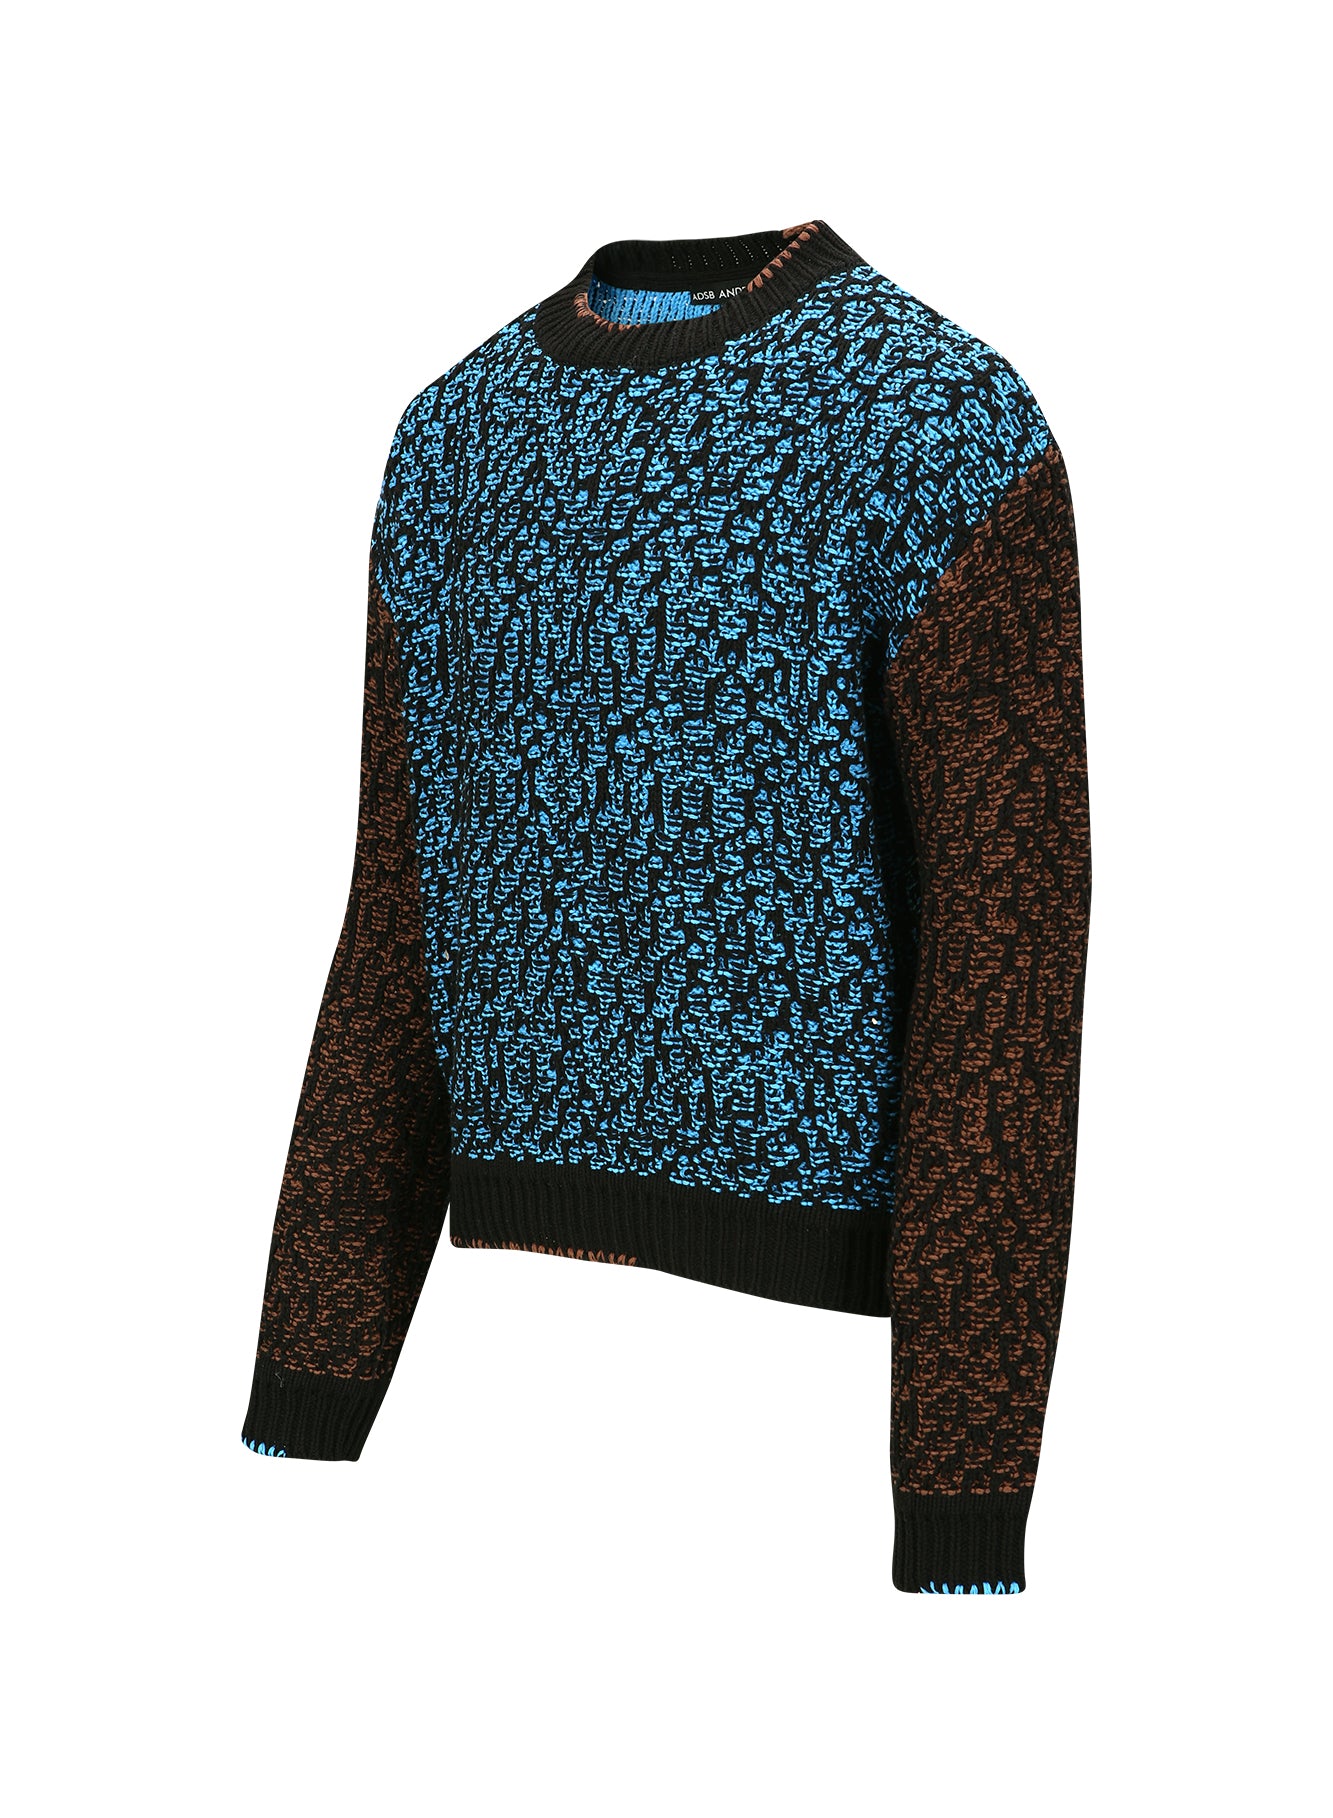 Andersson Bell Net Crewneck Sweater Multi Black Leo Boutique